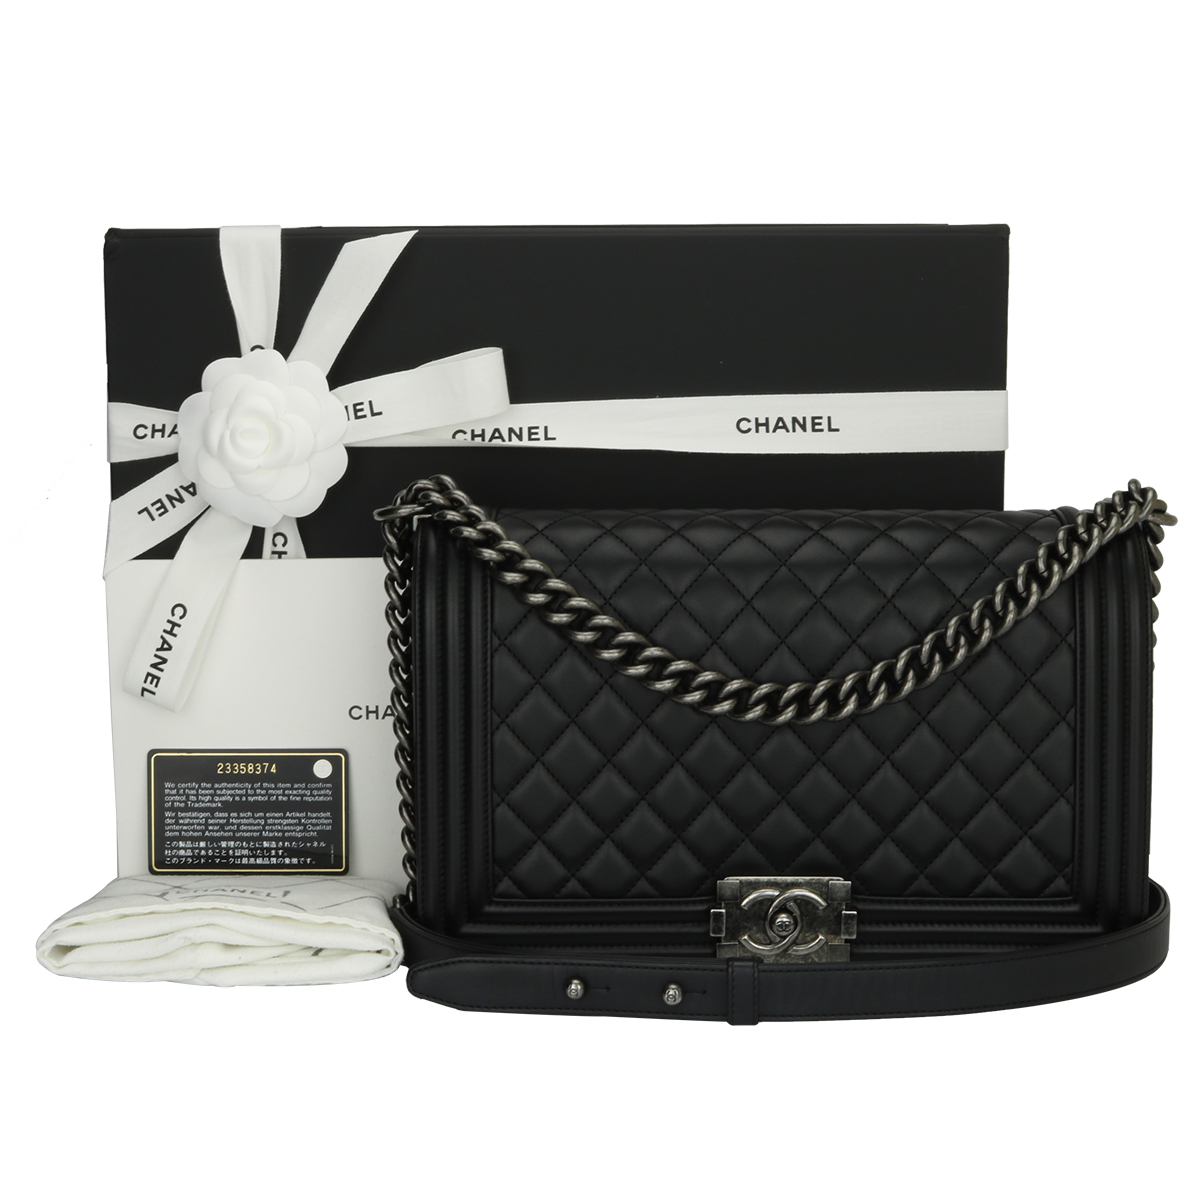 Chanel Handbags Fall 2019